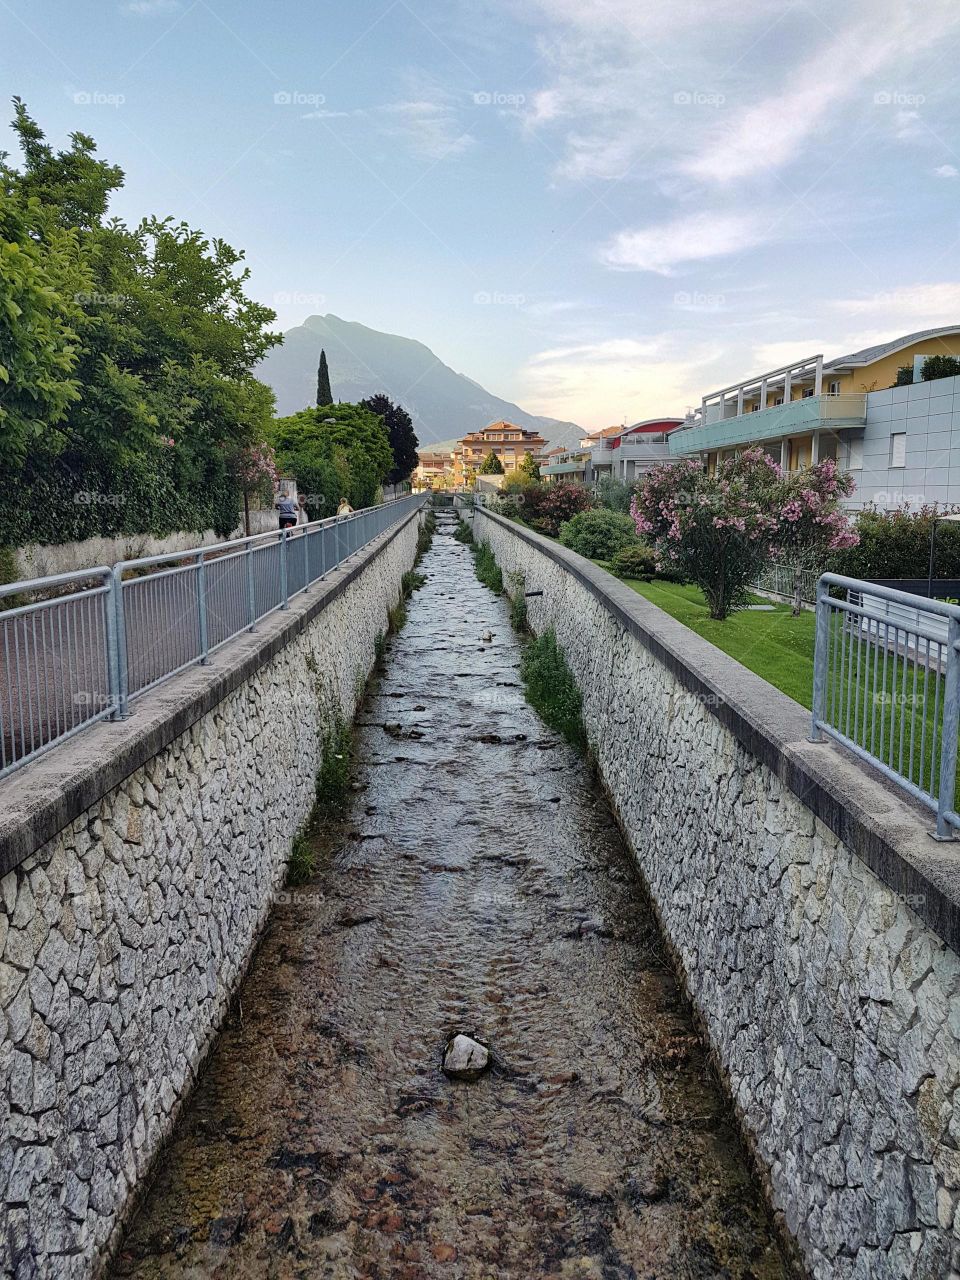 A beautiful Canal in Riva del Garda, Italy.